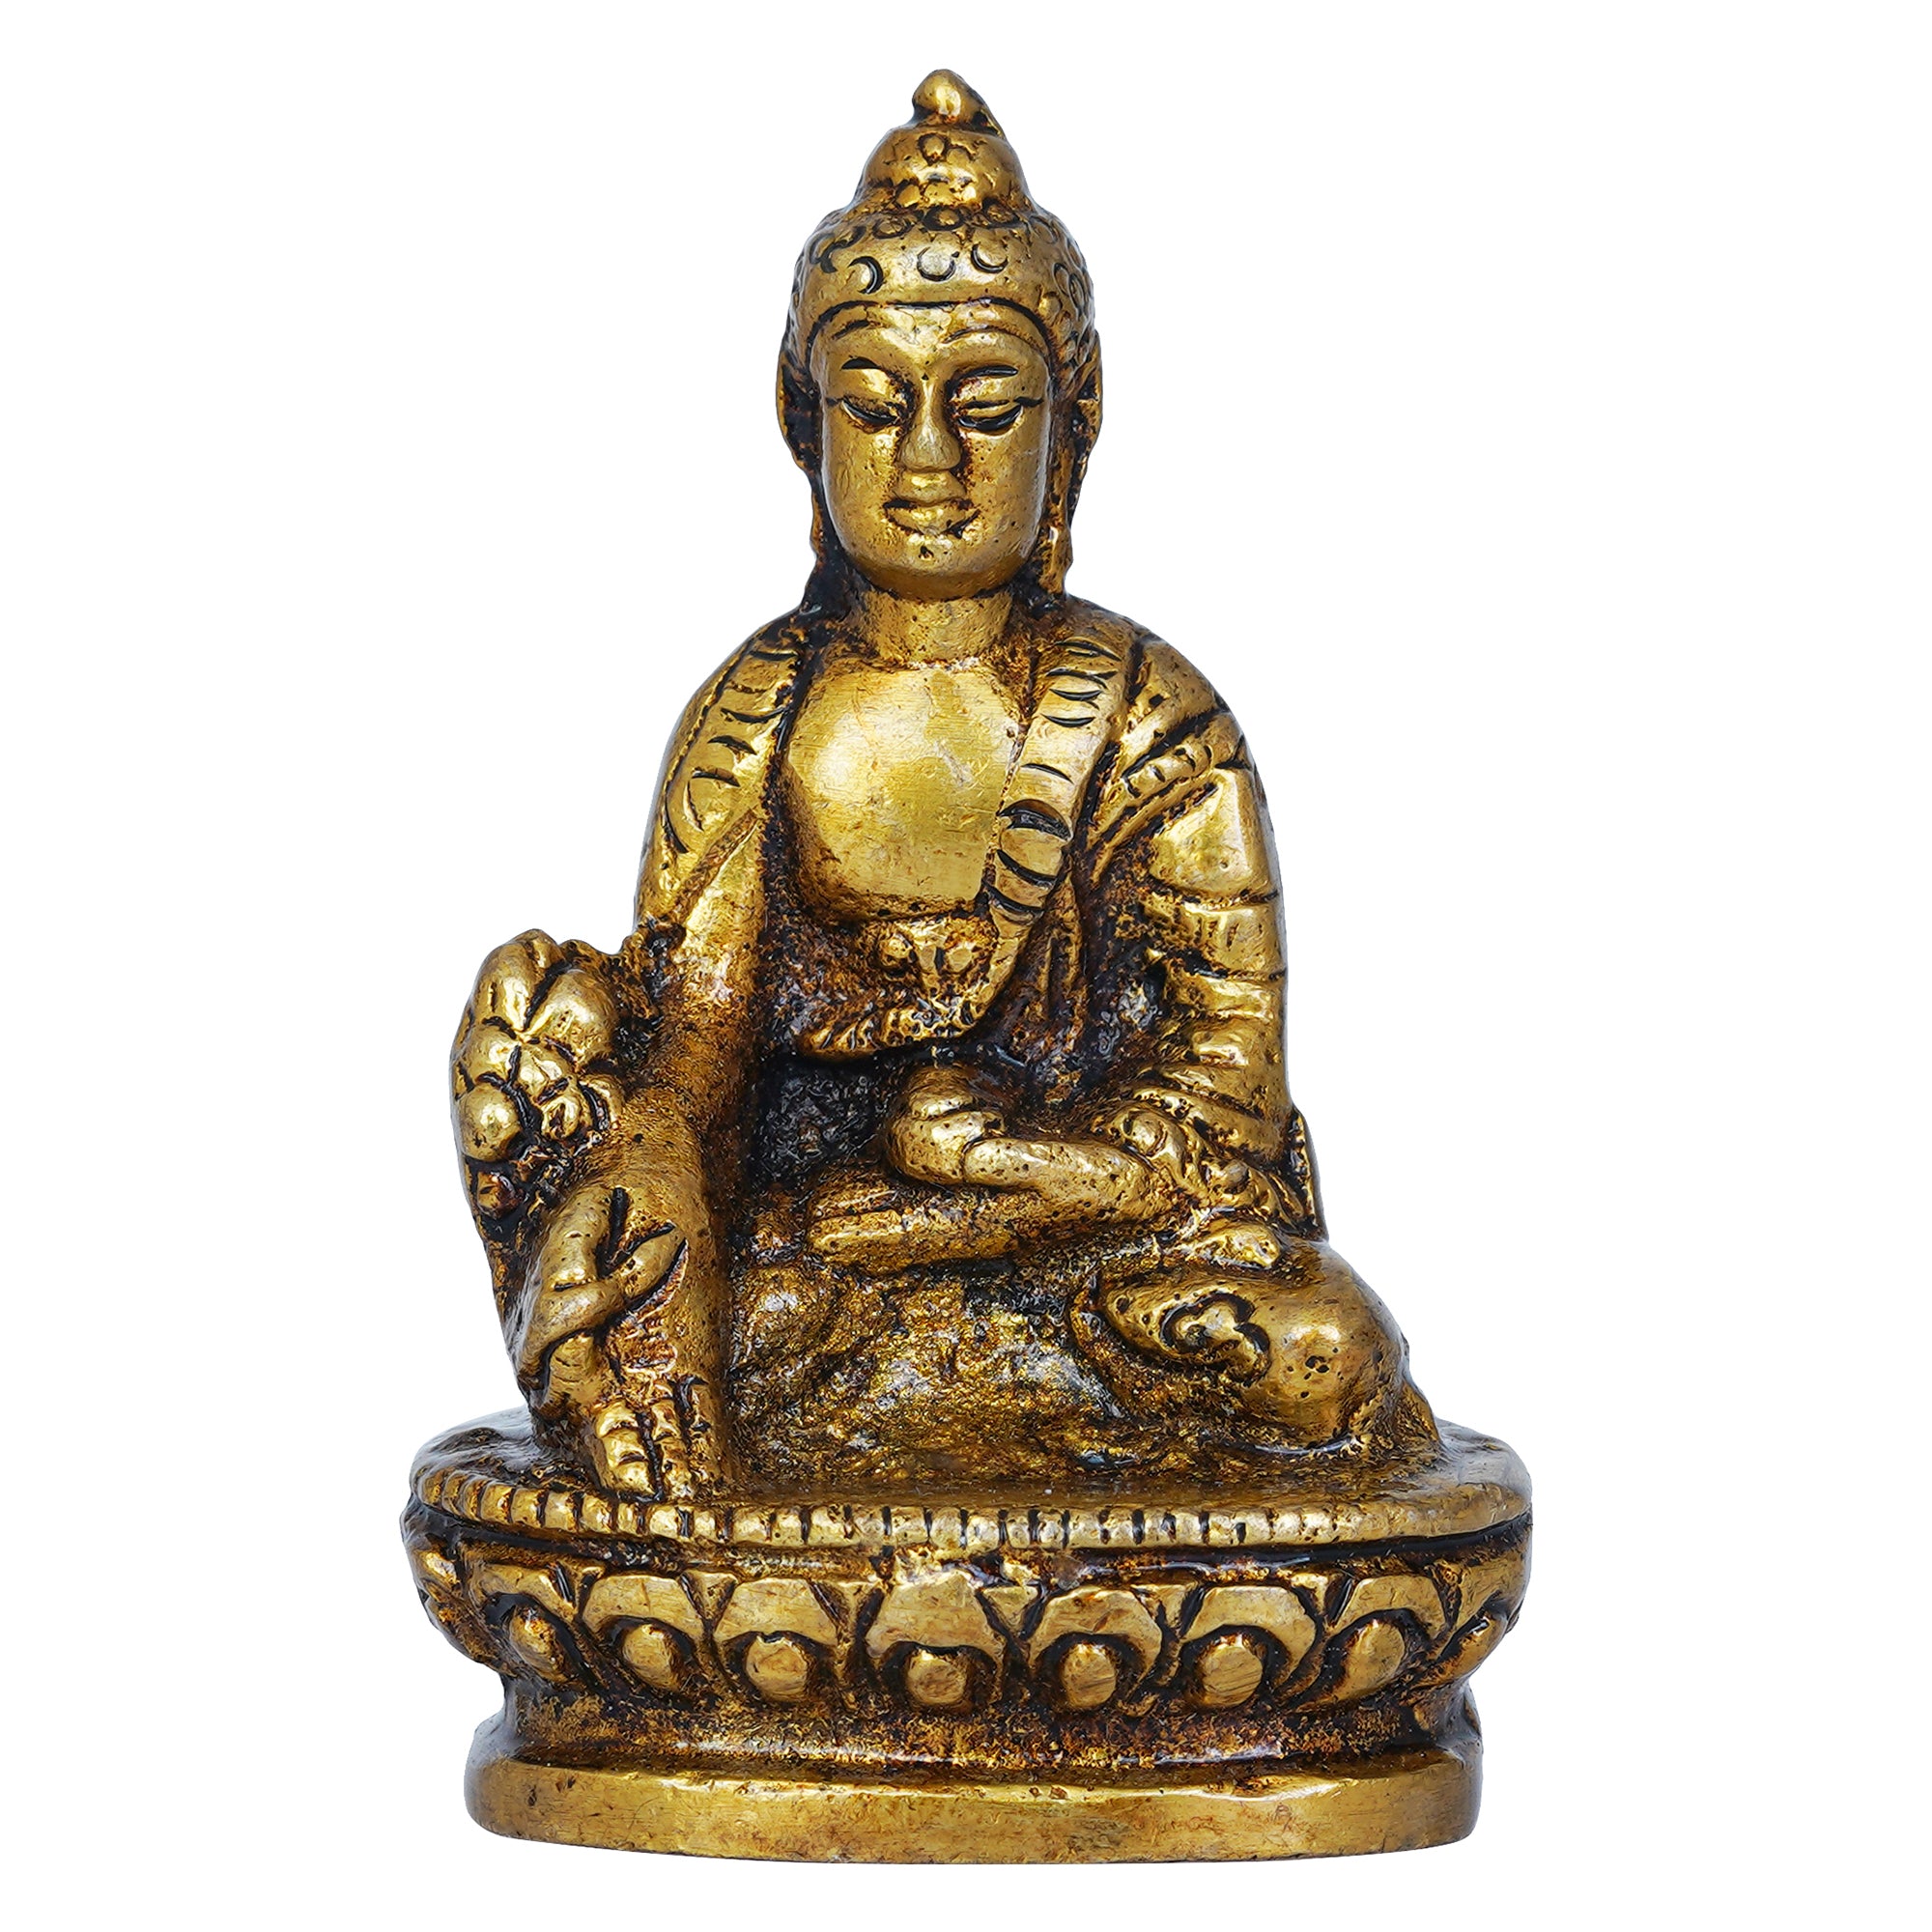 Golden Brass Lord Buddha Statue Murti Idol for Home Decor, Living Room, Office Desk, Car Dashboard - Buddha Purnima Gift to Bring Good Luck 2